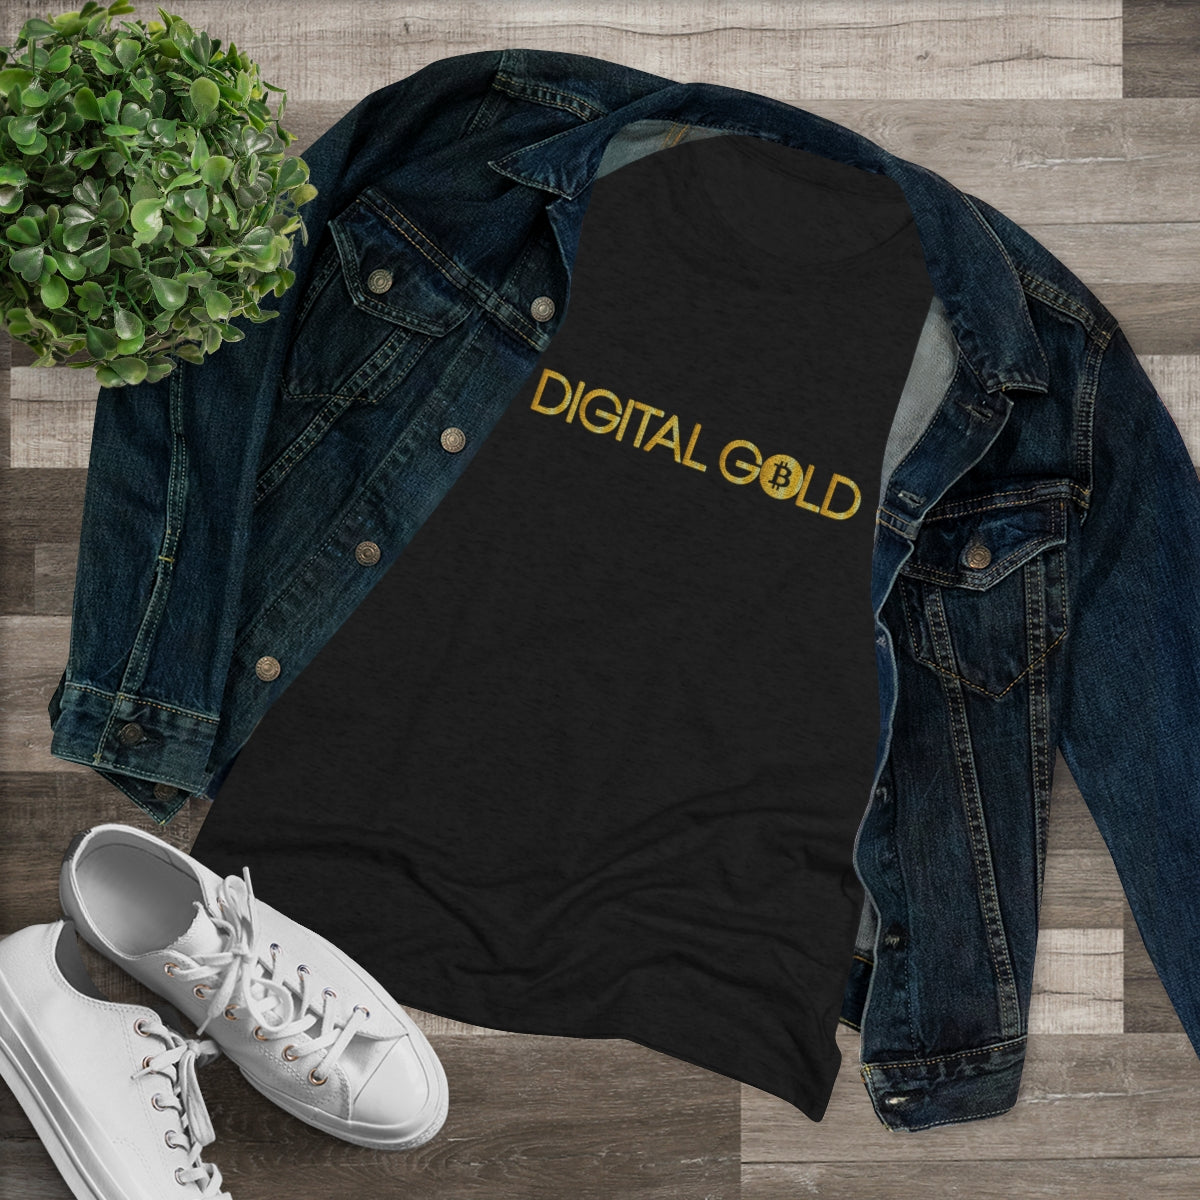 Digital Gold Women's Tee